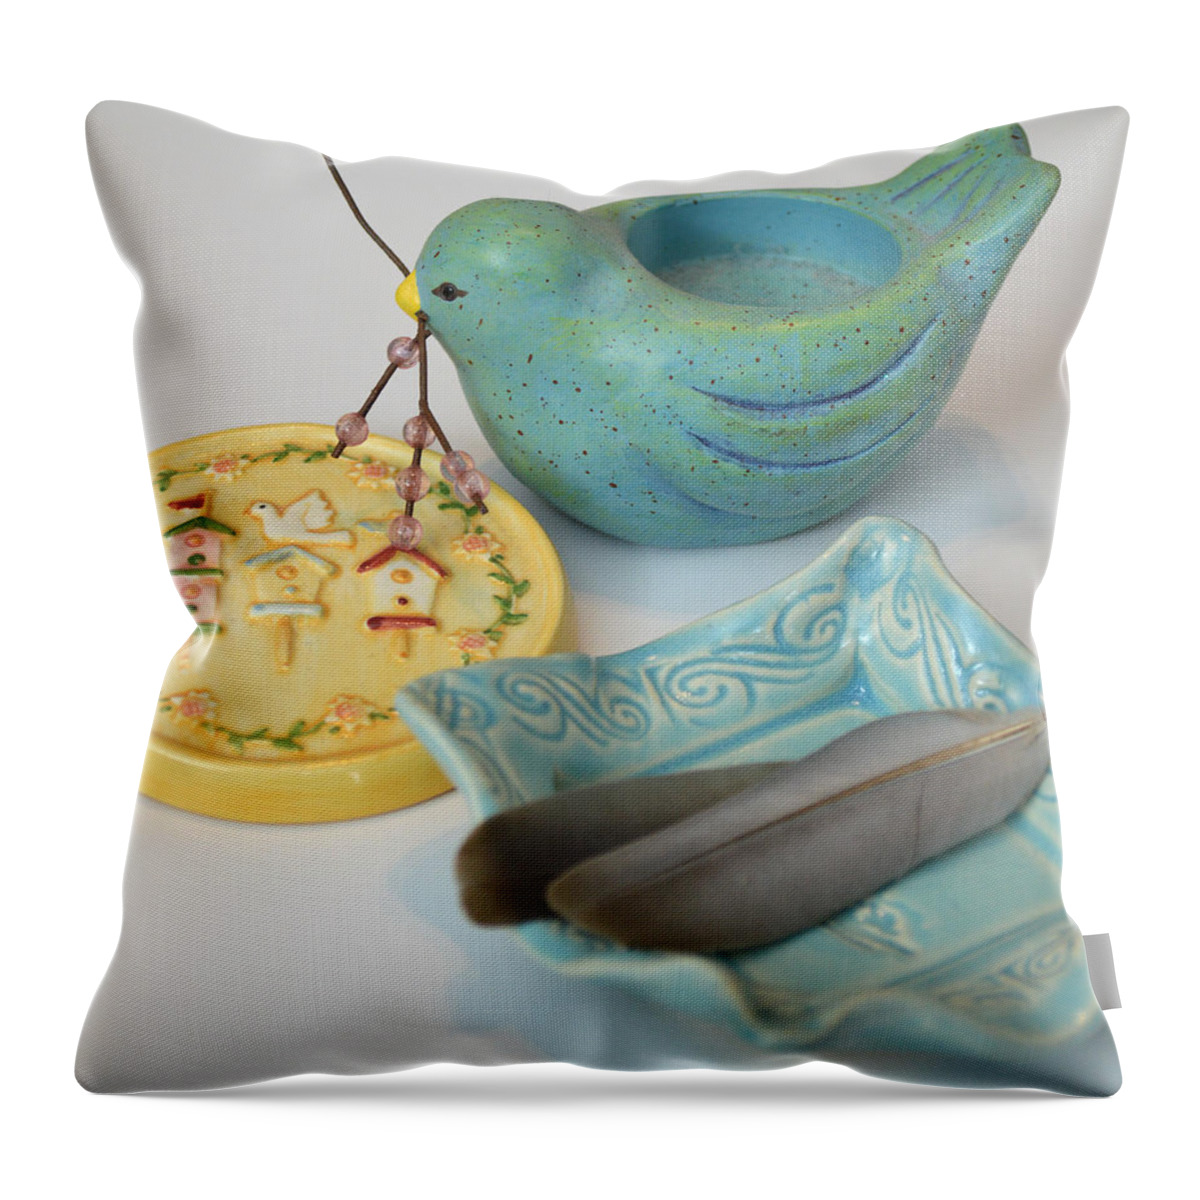 Still Life Throw Pillow featuring the photograph Bird Motif by Lena Wilhite